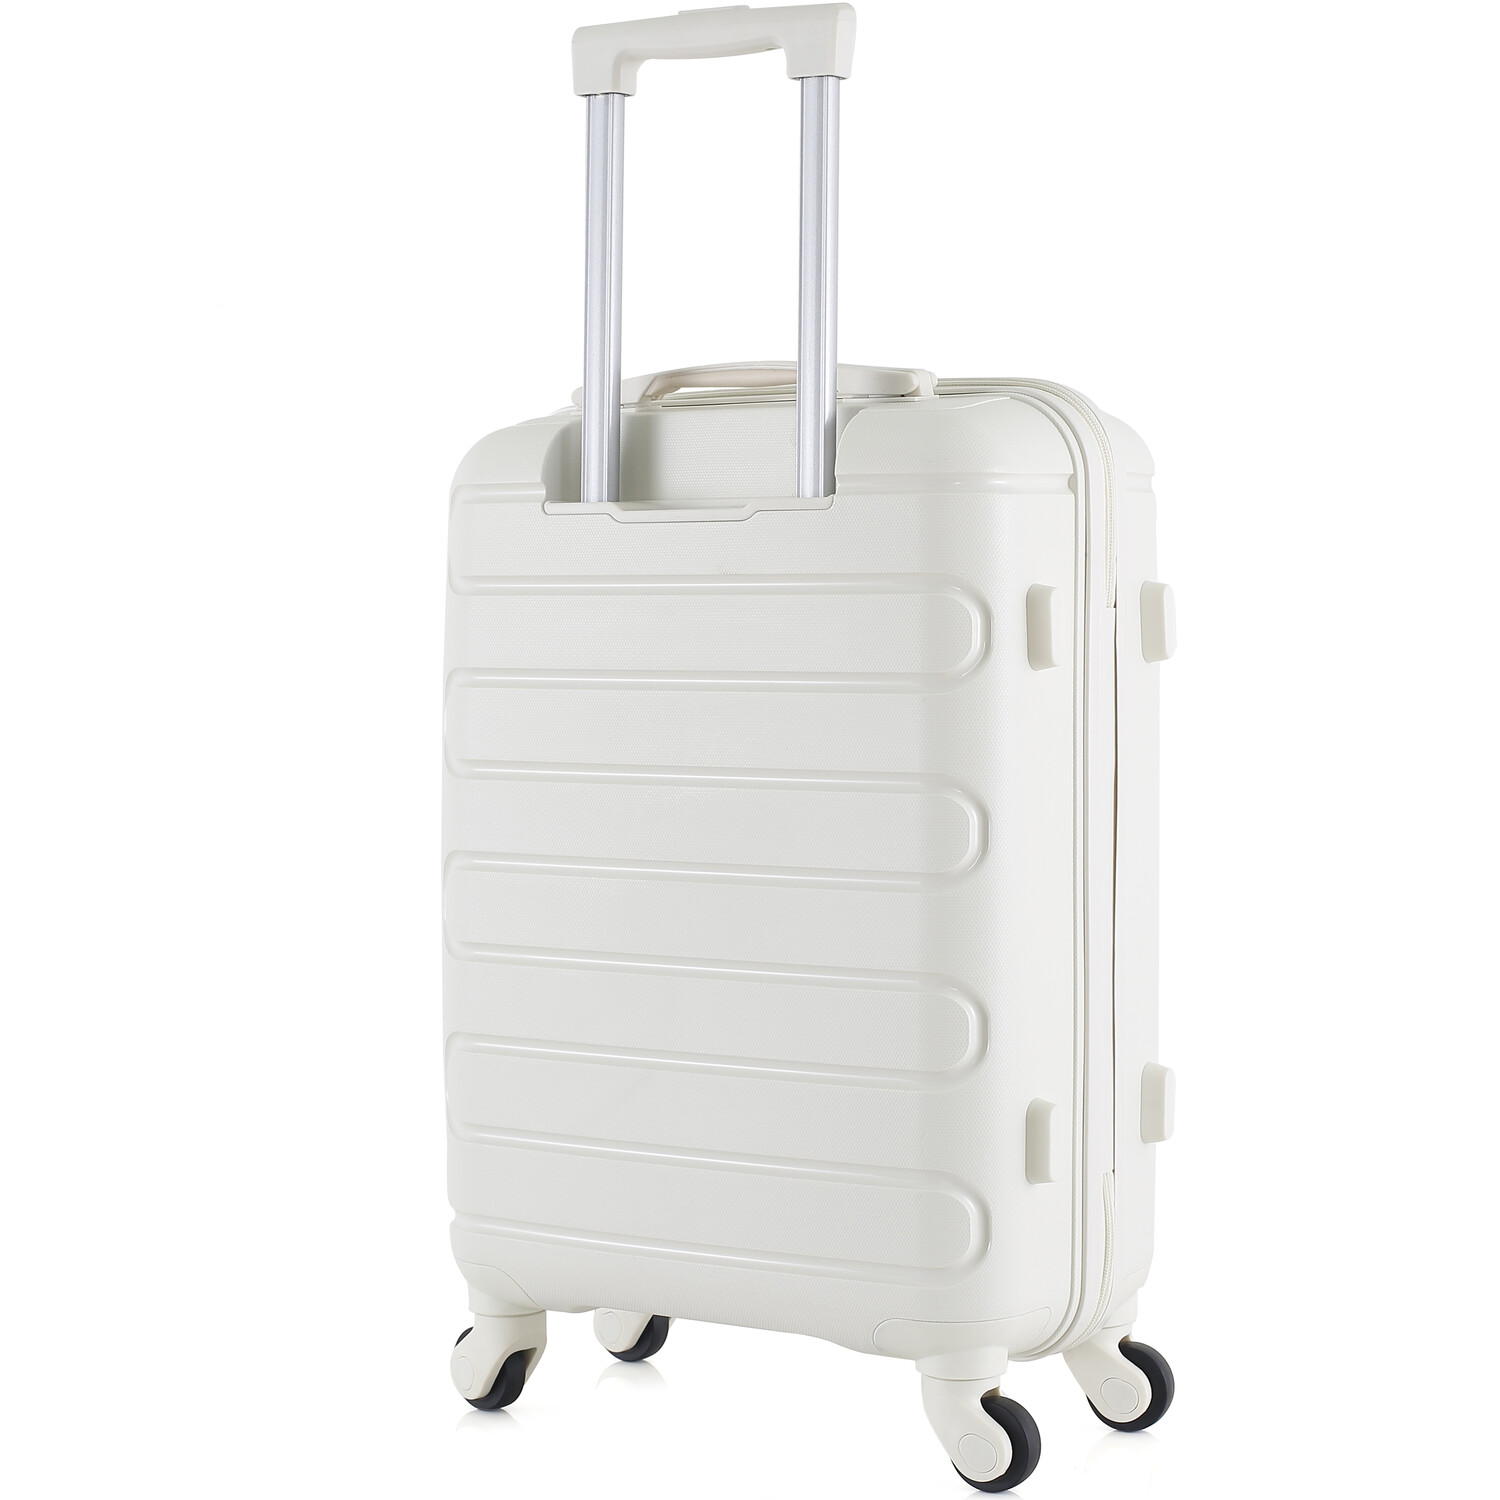 Swift Horizon Suitcase - Cotton White / Cabin Case Image 3